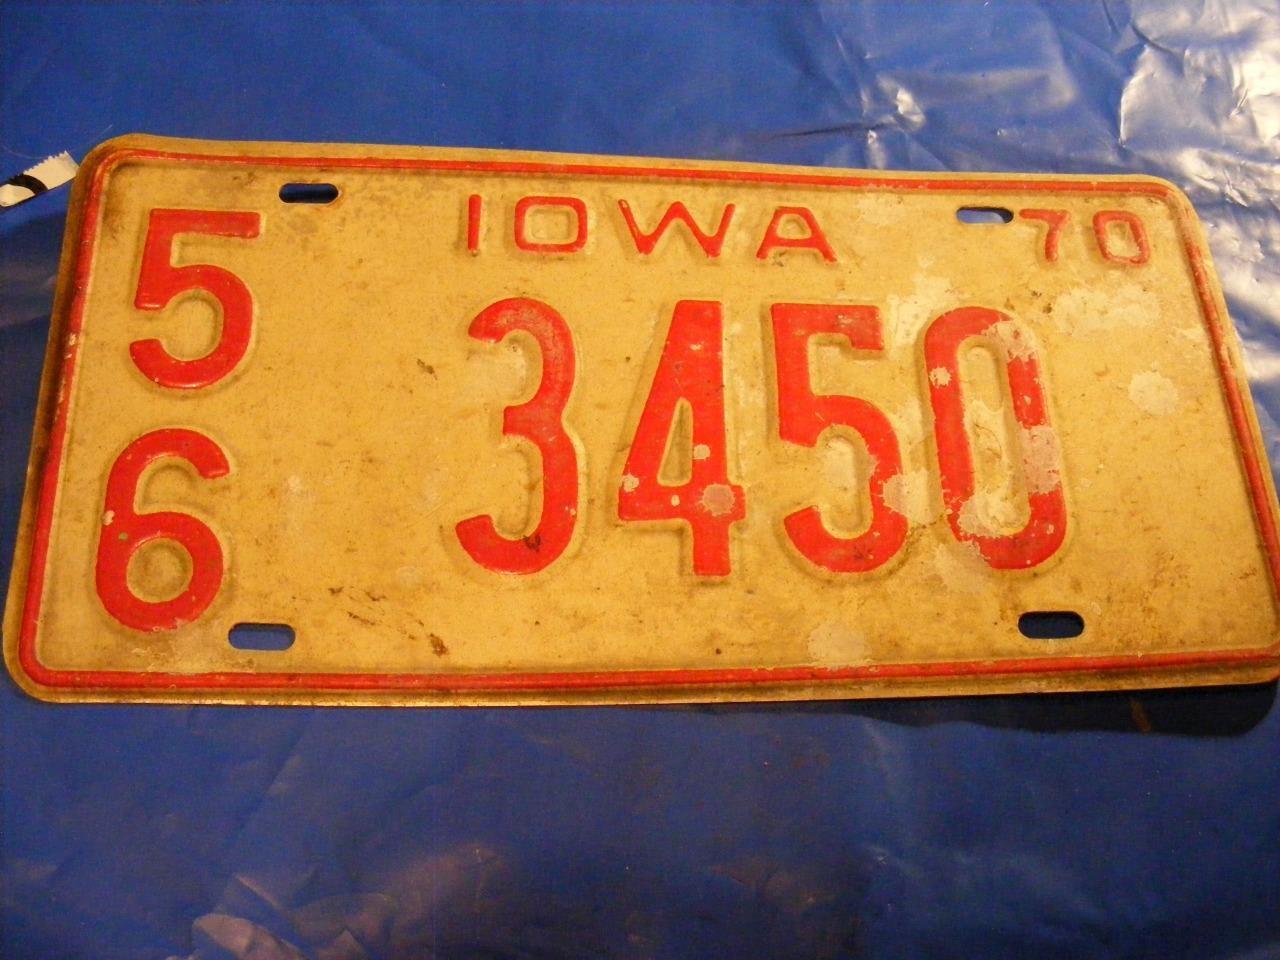 1970 IOWA STATE LICENSE PLATE AUTO VEHICLE CAR TAG 56 3450 YEAR 70